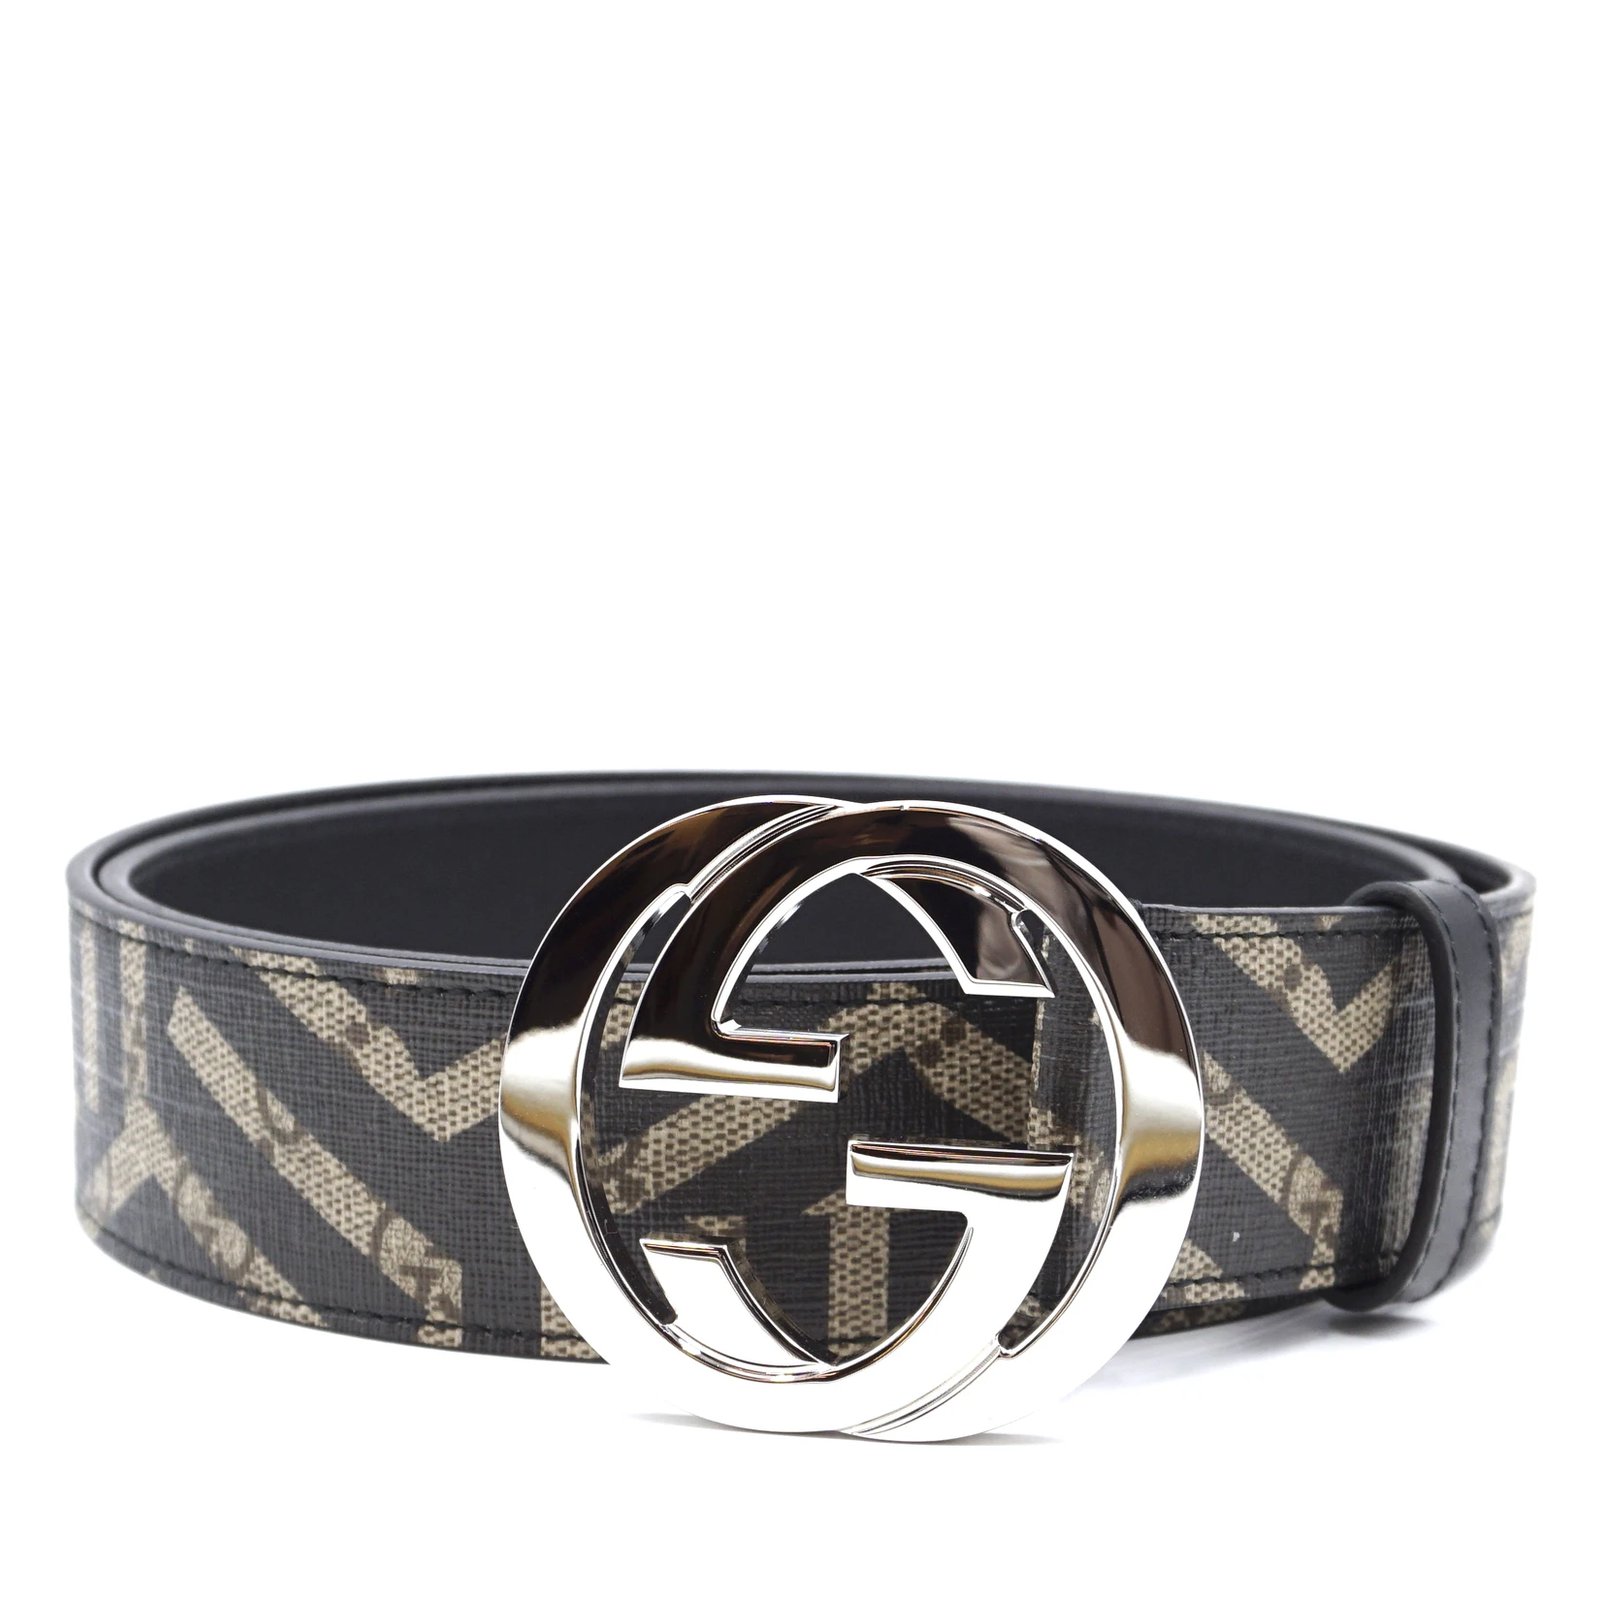 Gucci Gucci Beige Black GG Leather Supreme Caleido Belt Size 100/40 Belts Leather Multiple ...